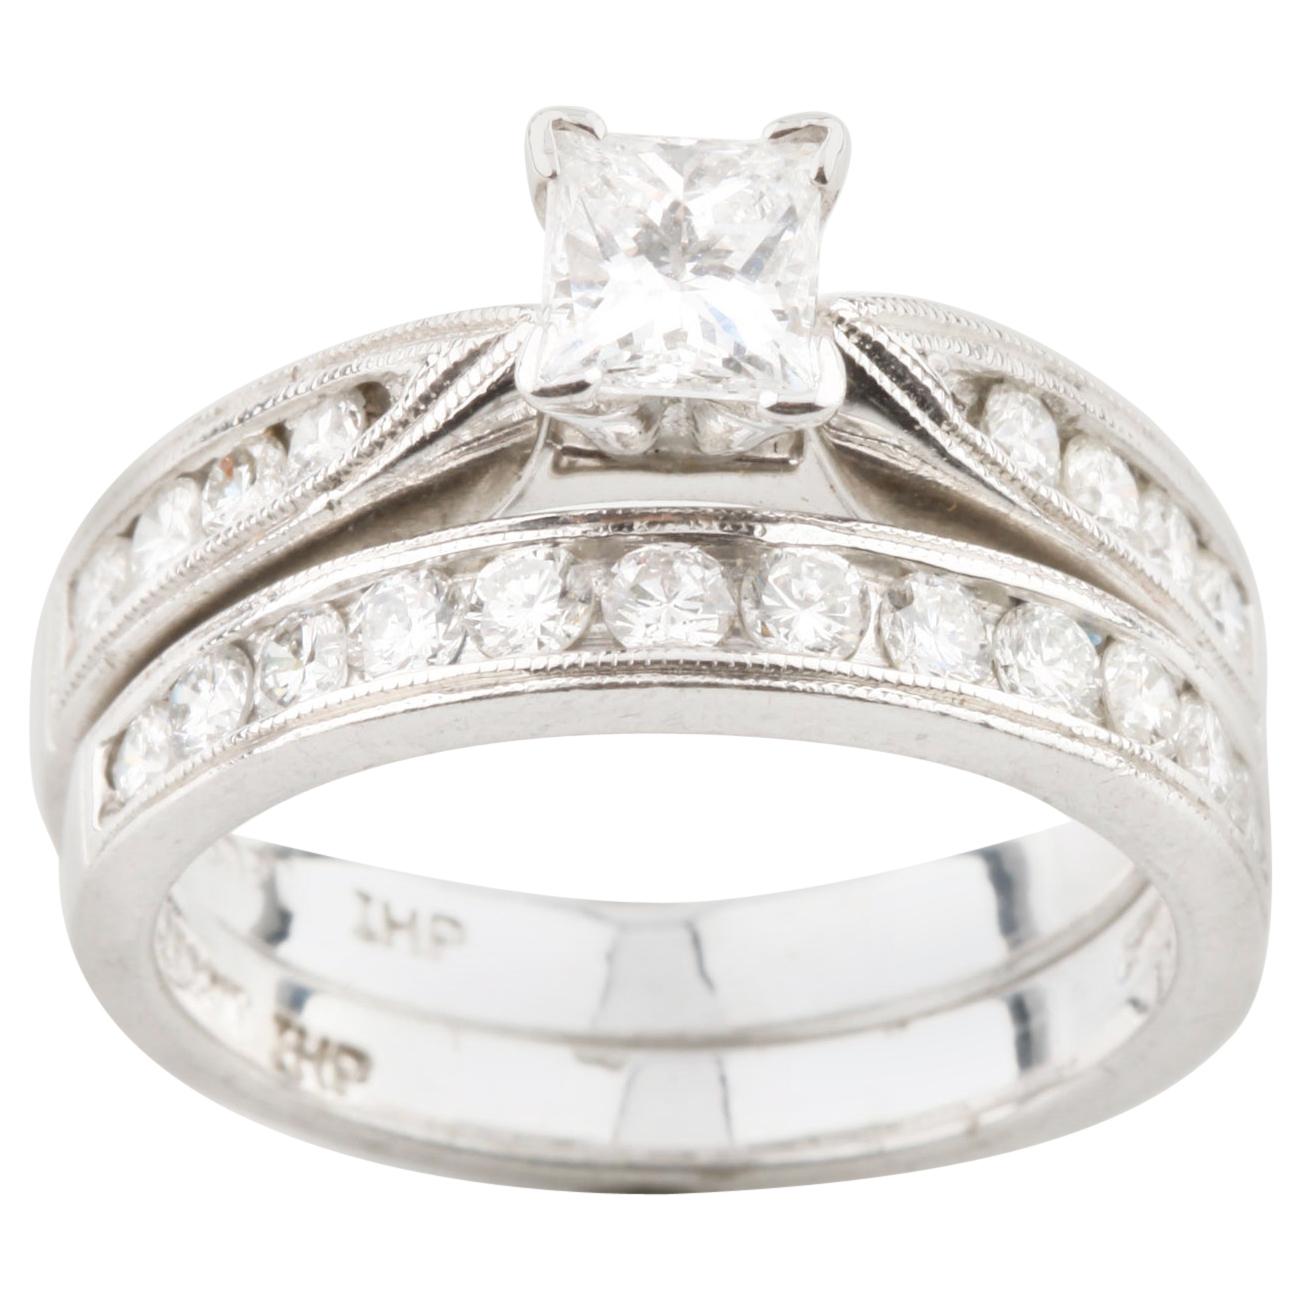 0.56 Carat Princess Cut Solitaire Wedding Set with Accent Stones in Platinum